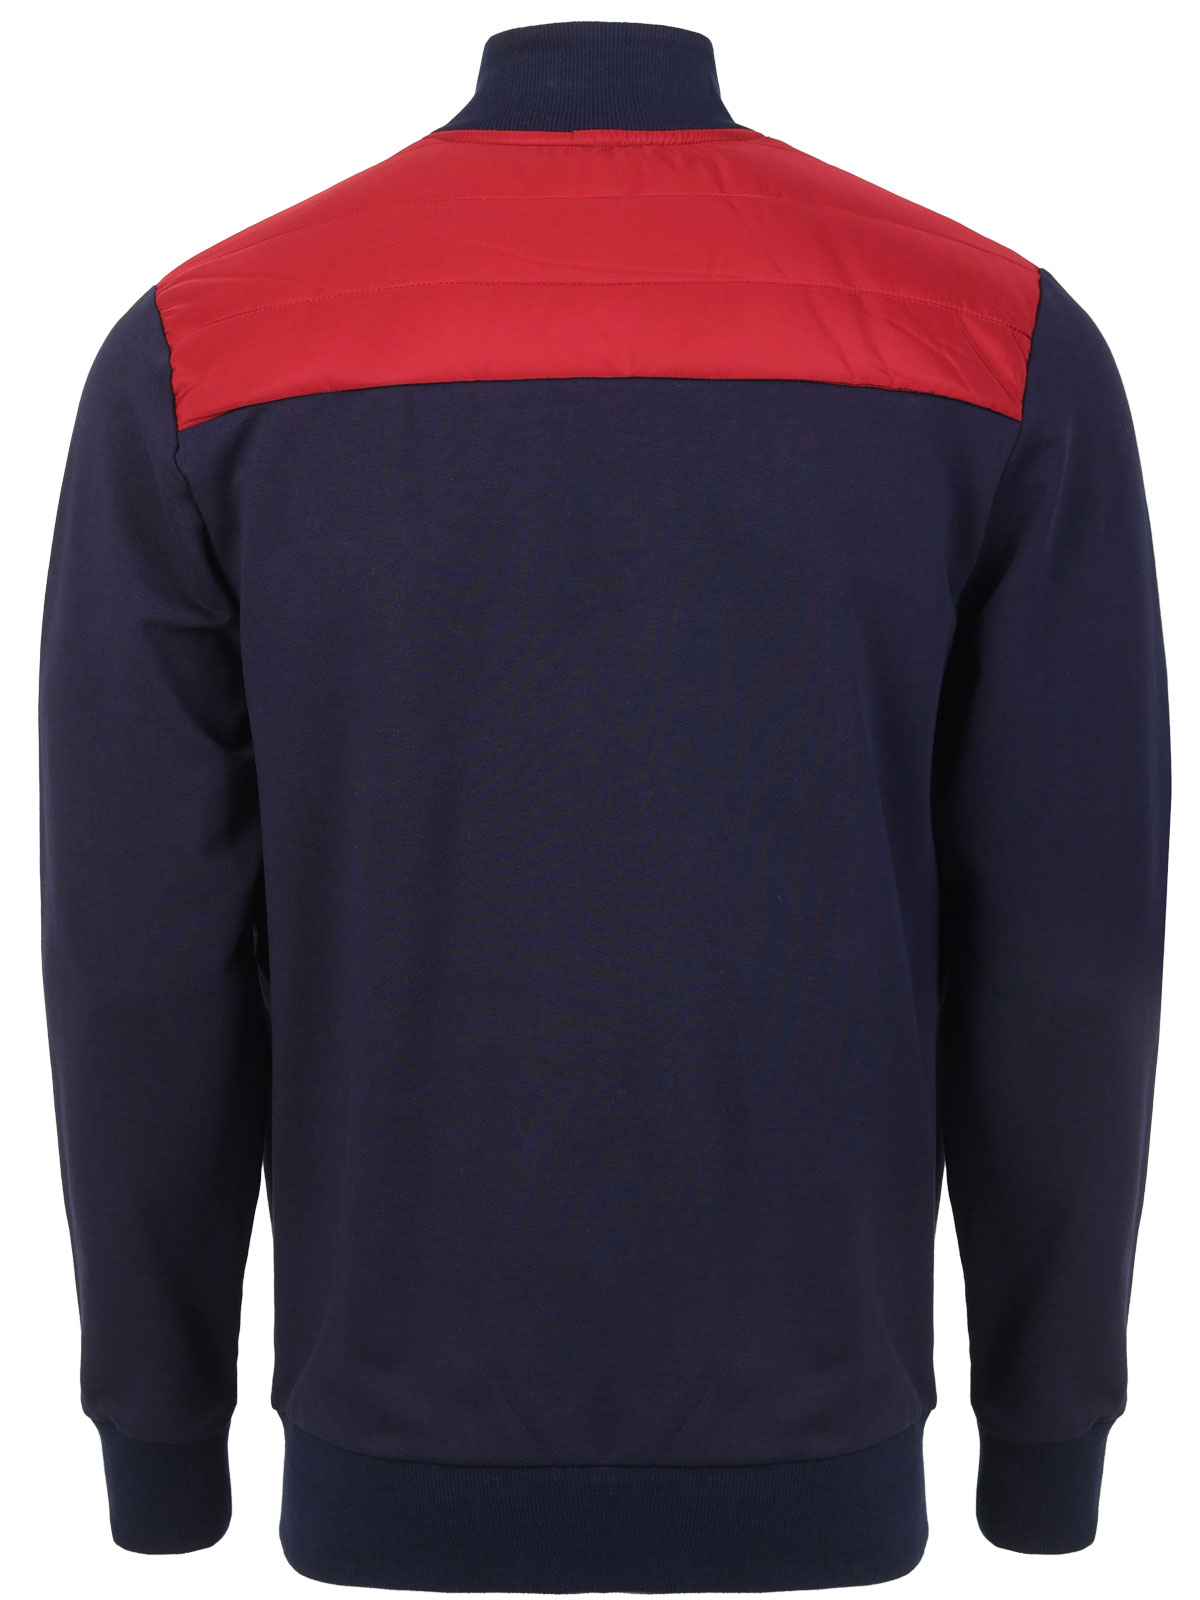 Sweatshirt in dark blue and red - 28103 € 66.37 img3